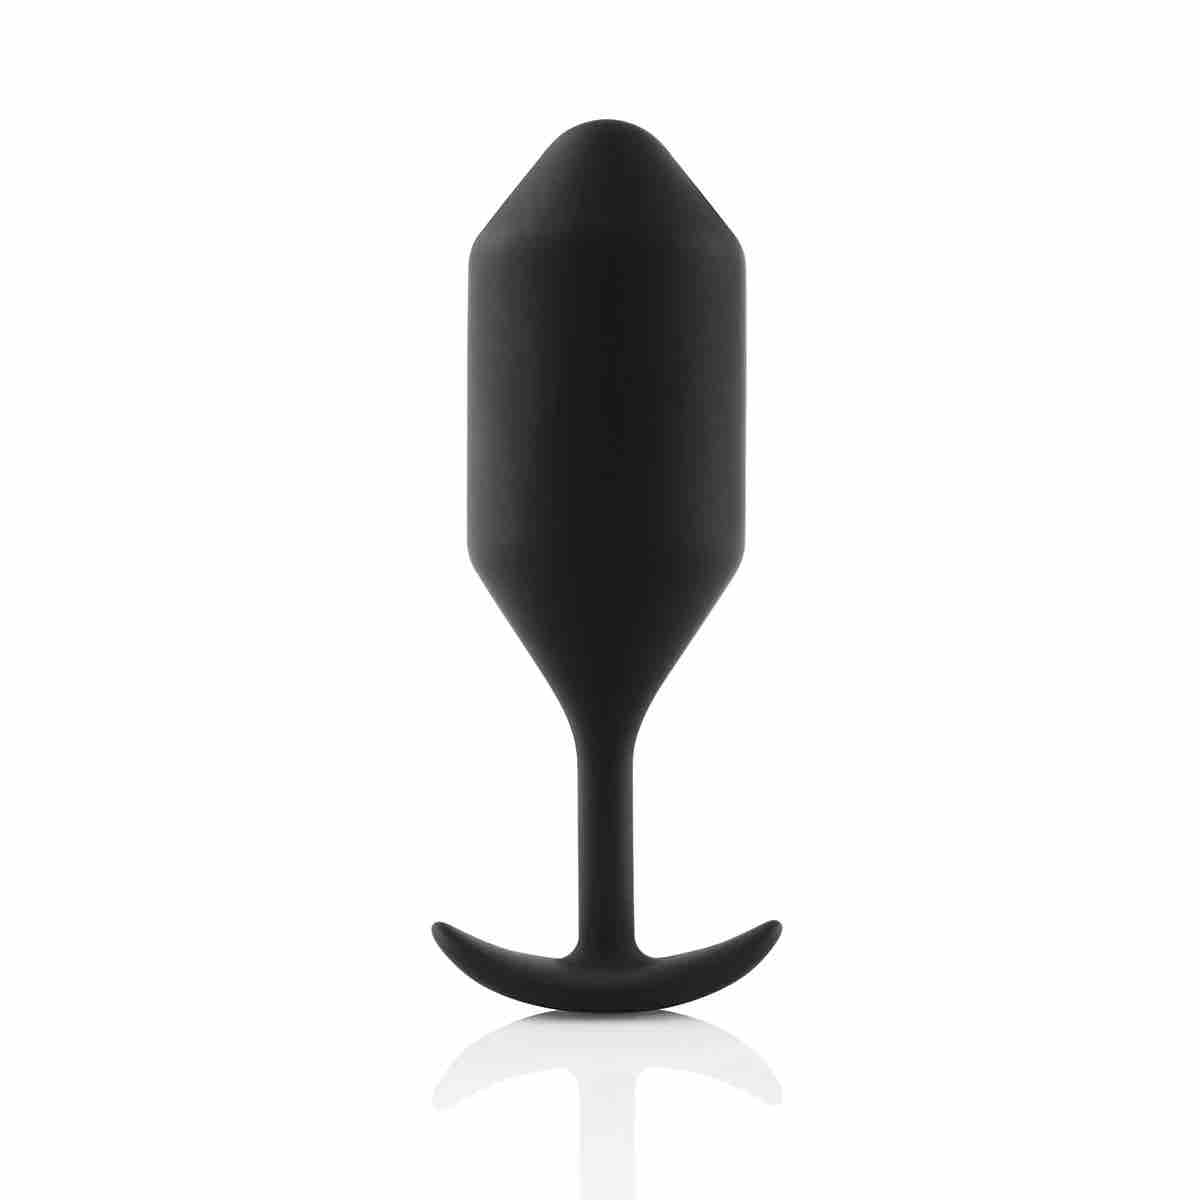 Size 4 black B-Vibe Snug Plug.